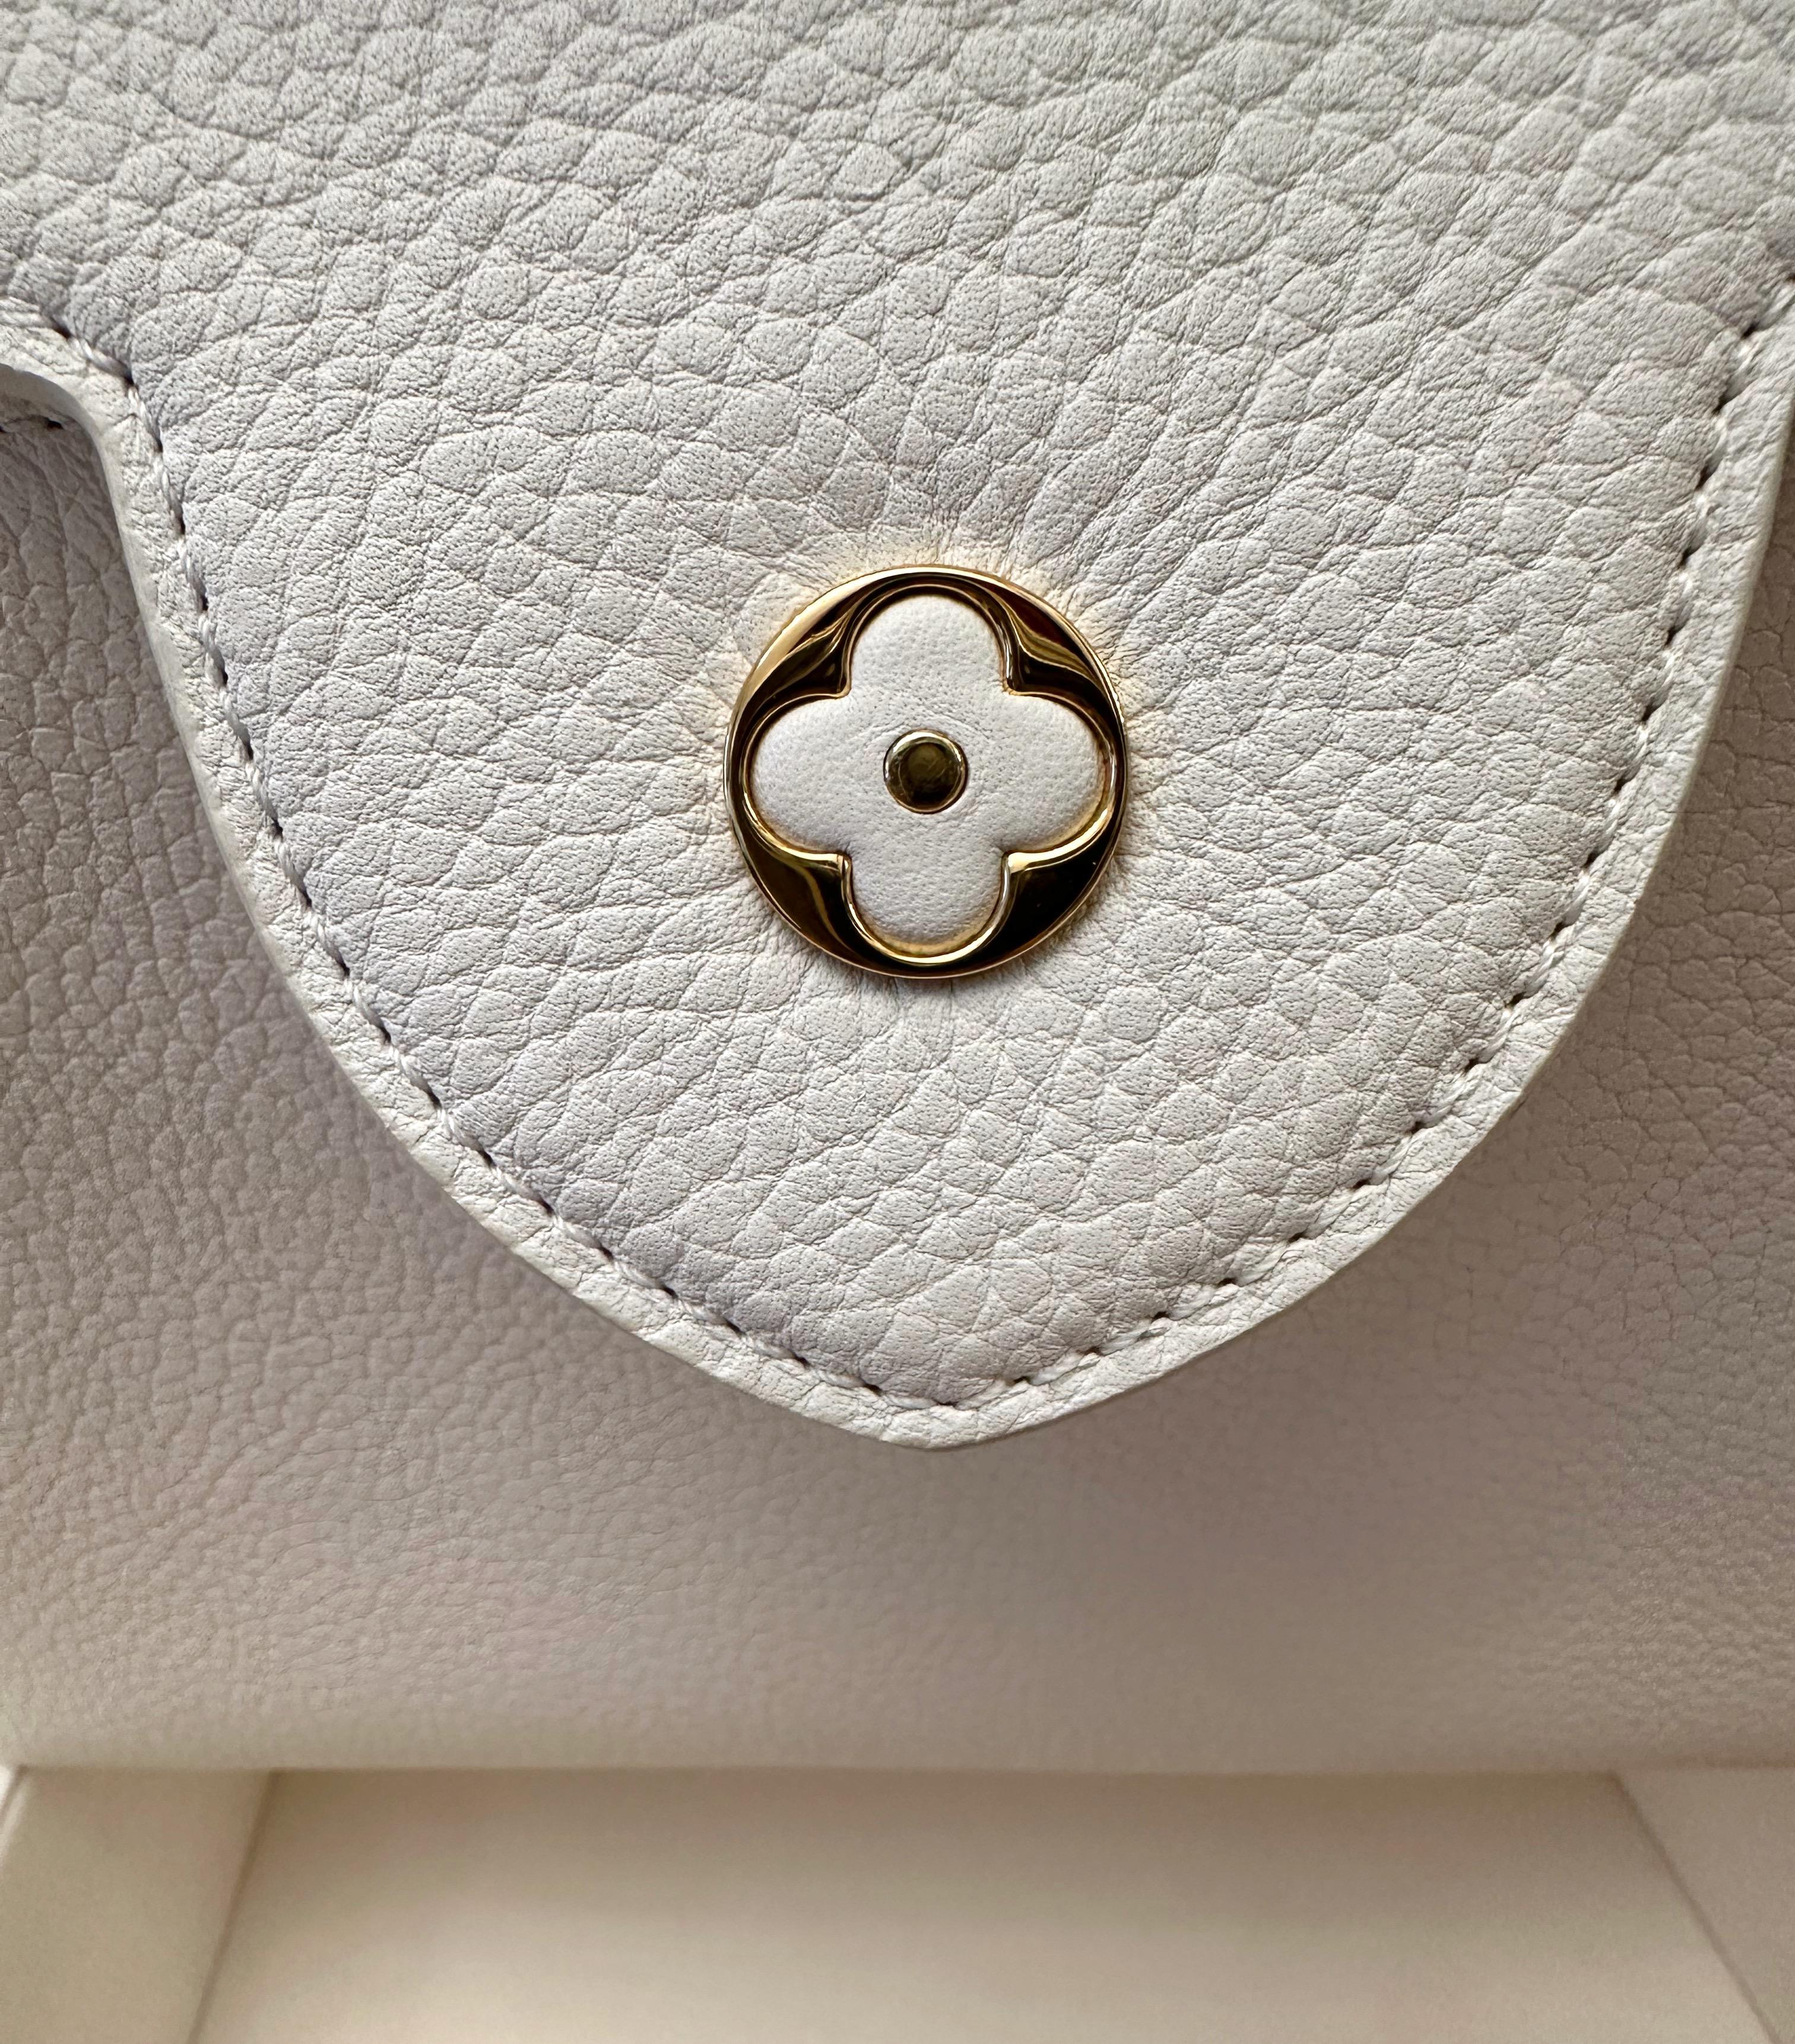 Louis Vuitton Urs Fischer Limited Edition Artycapucines BB Bag  For Sale 8